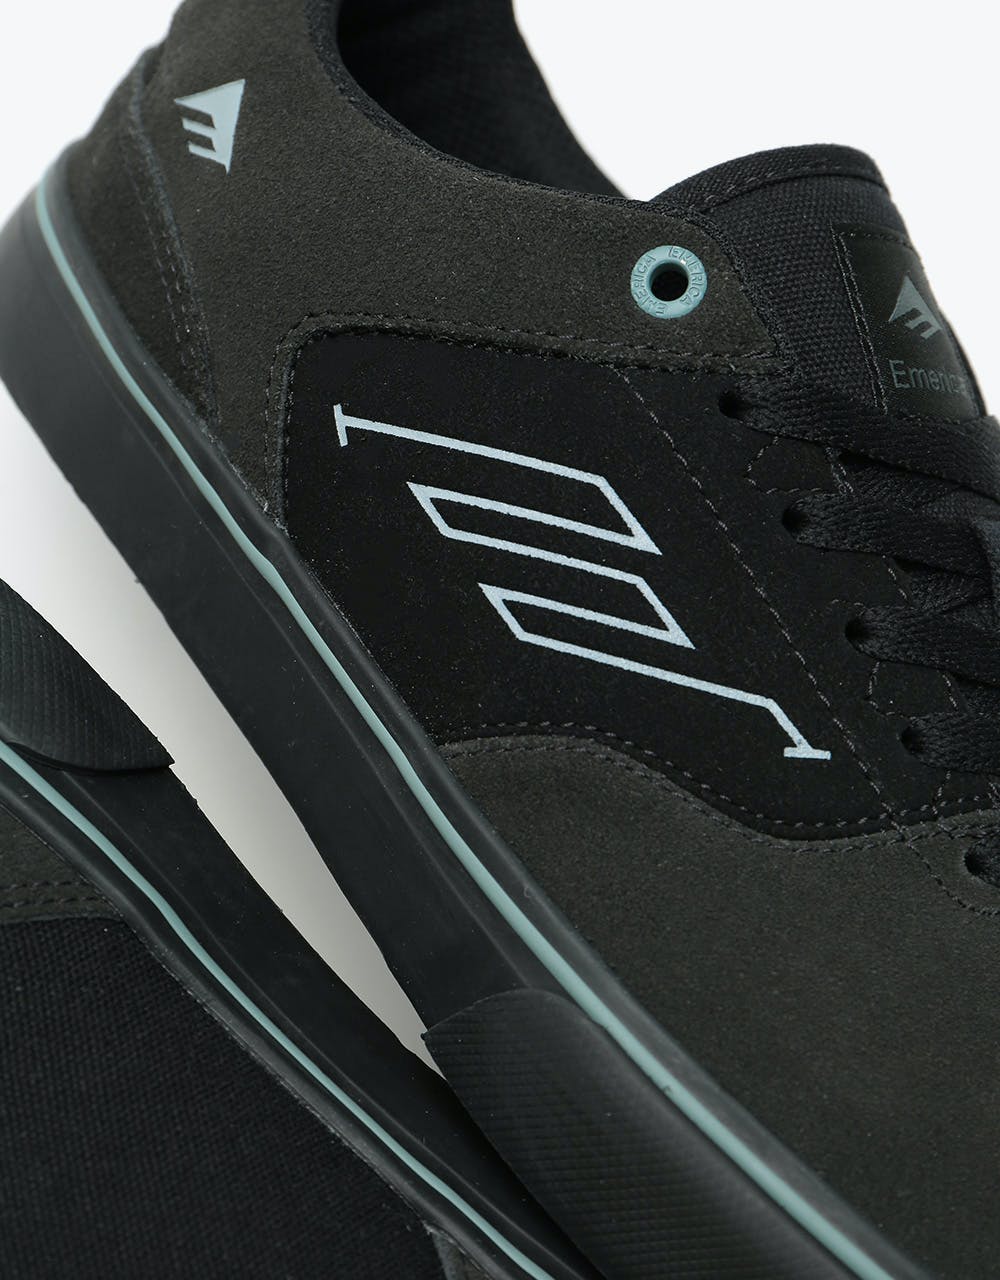 Emerica Low Vulc Skate Shoes - Grey/Black/Blue